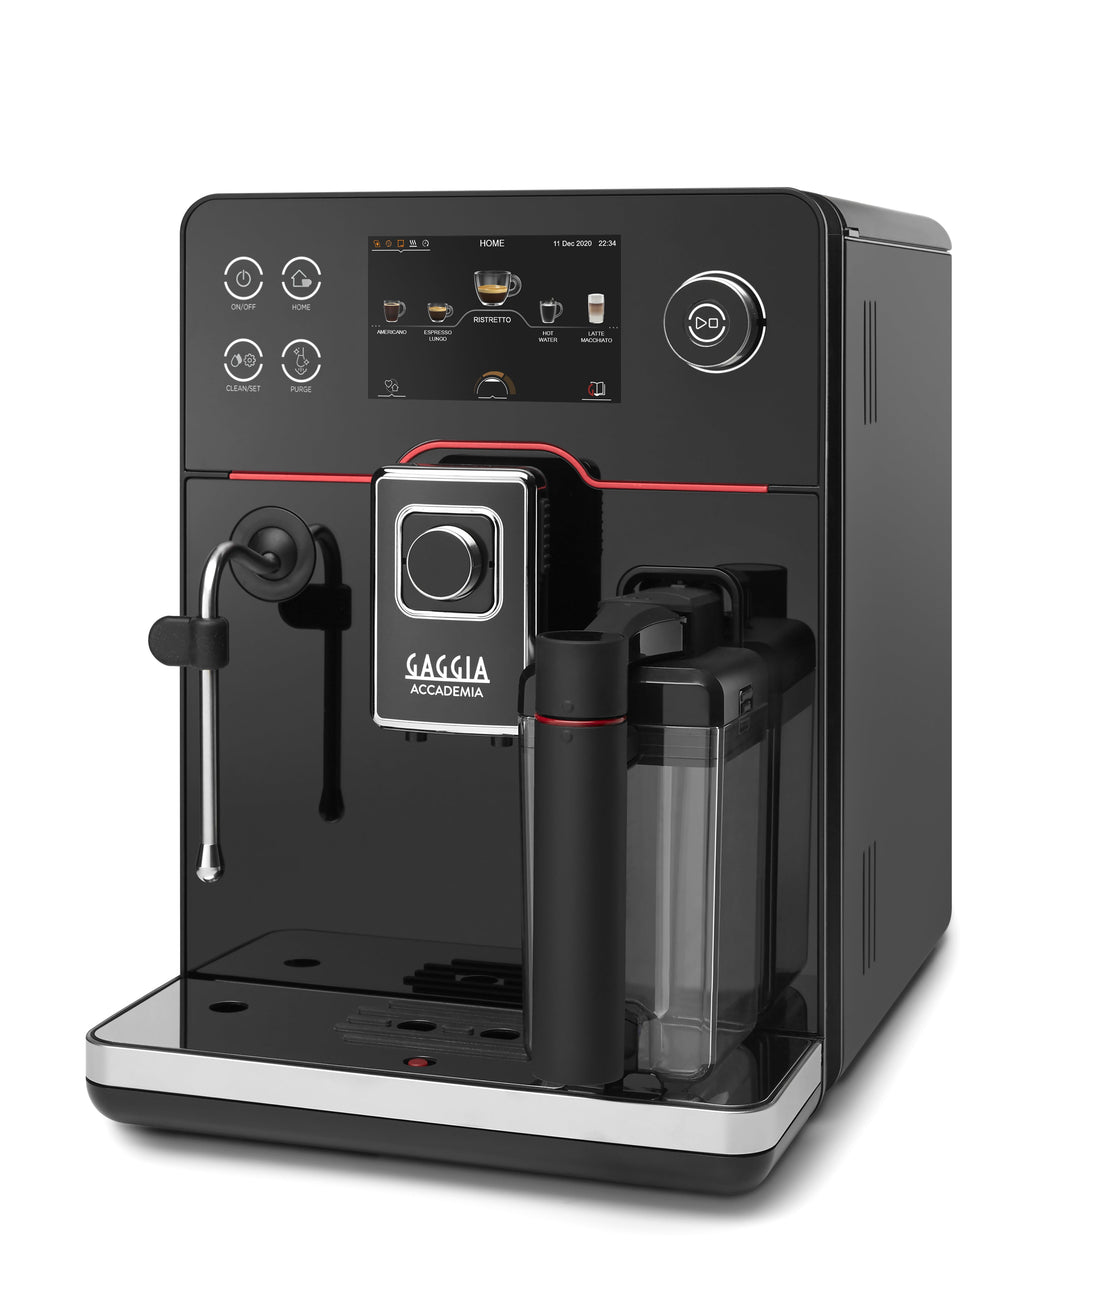 Wirsh espresso machine: an impressive model for just $150